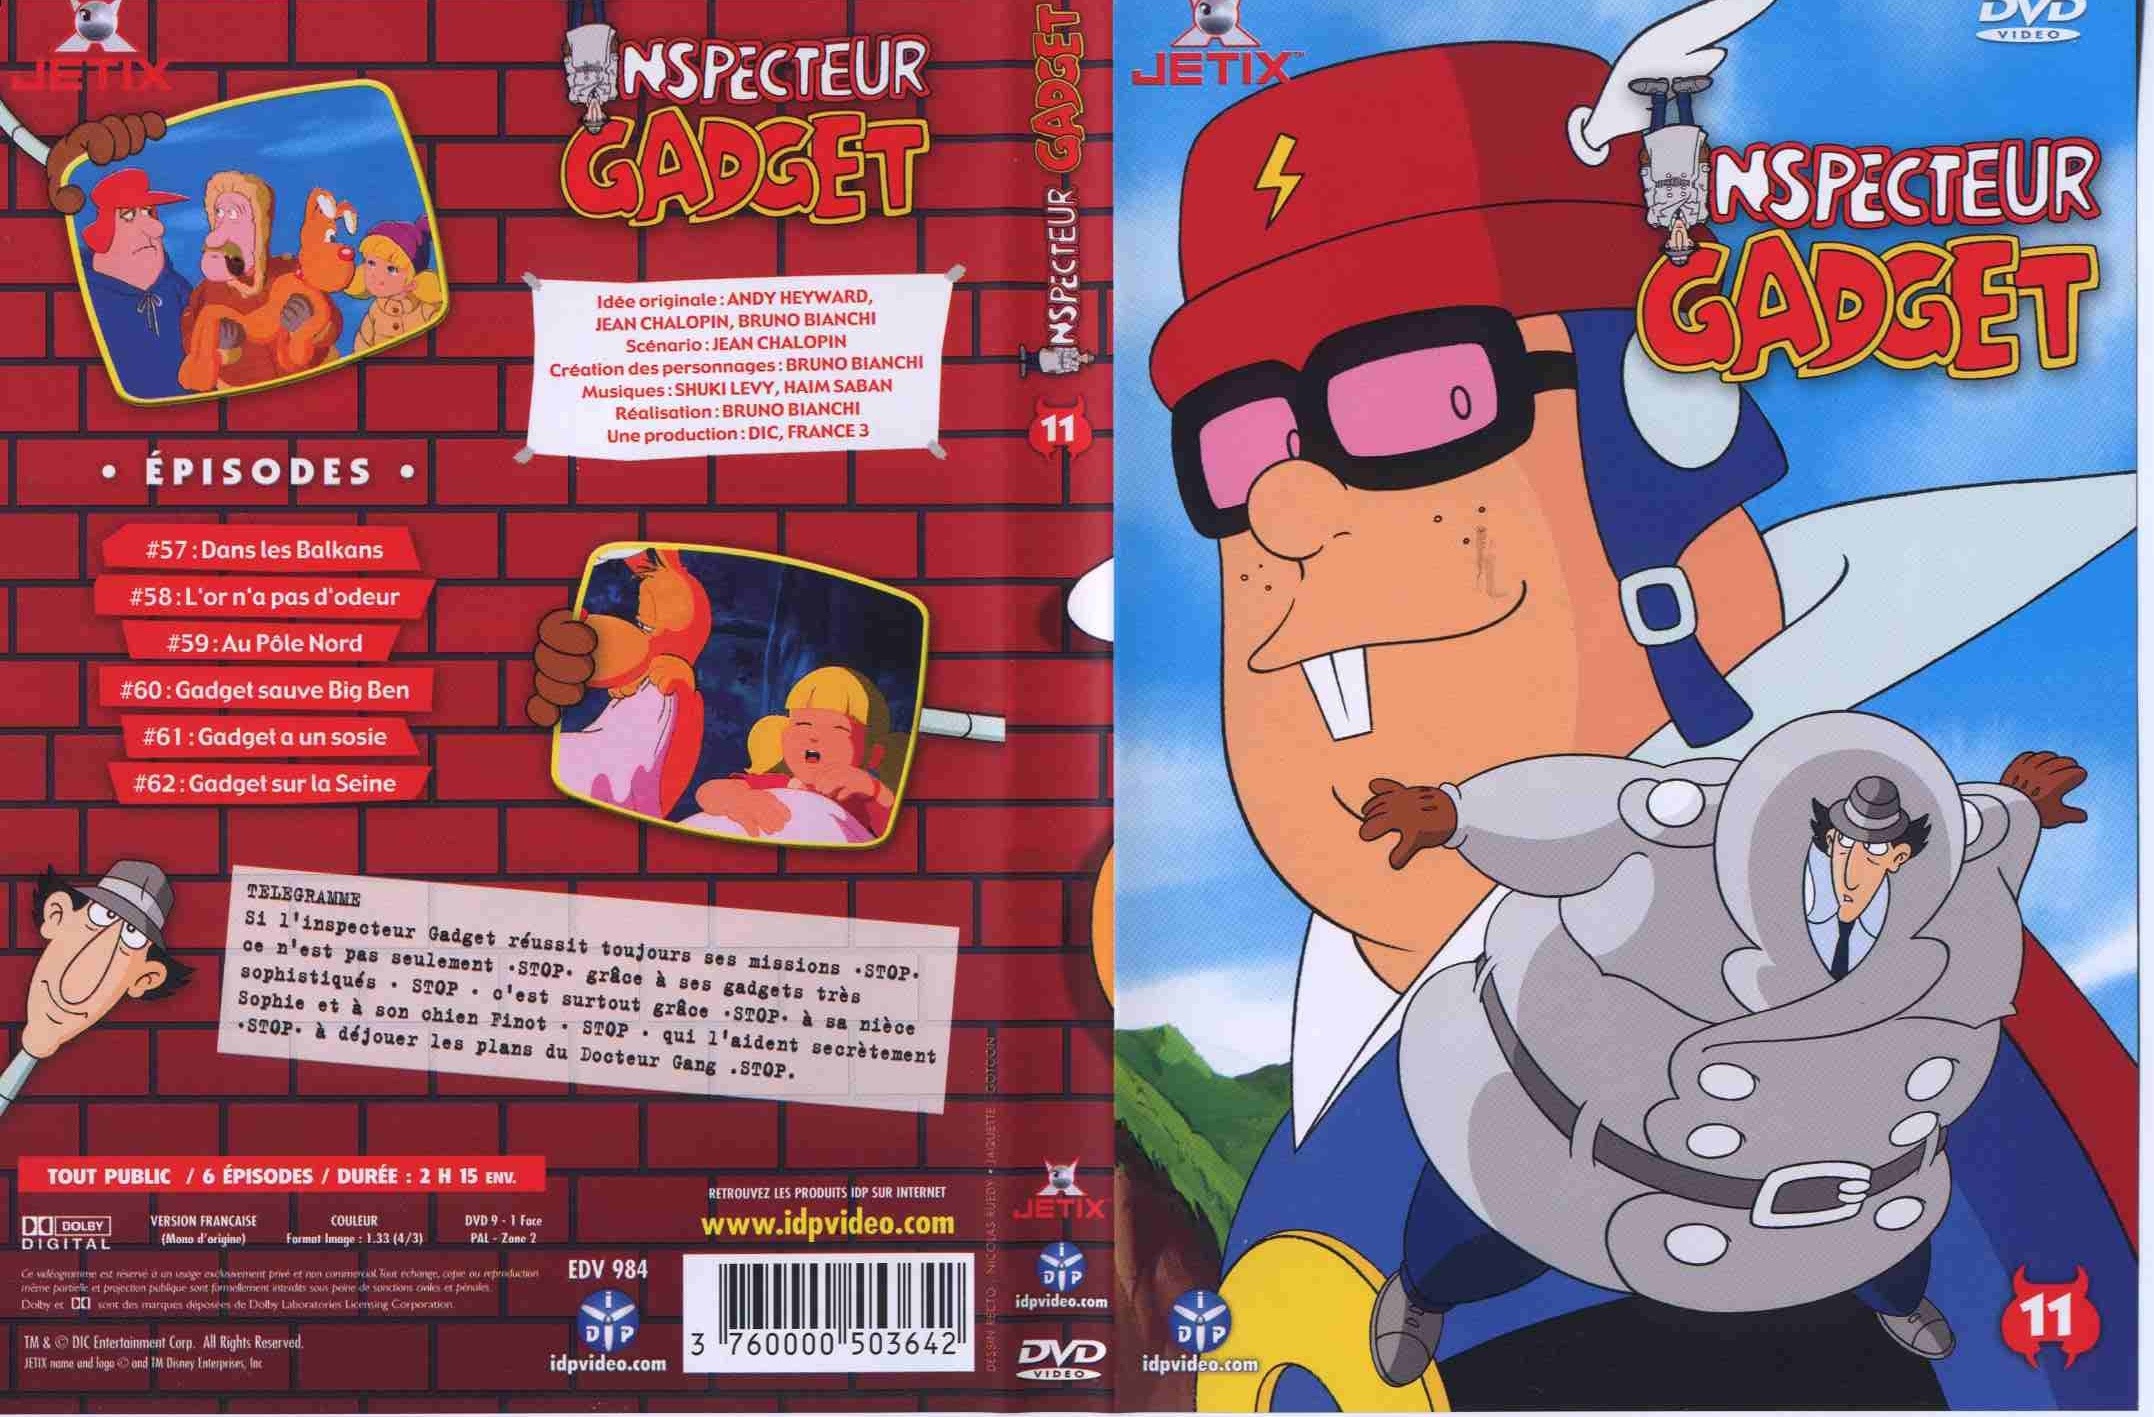 Jaquette DVD Inspecteur gadget vol 11